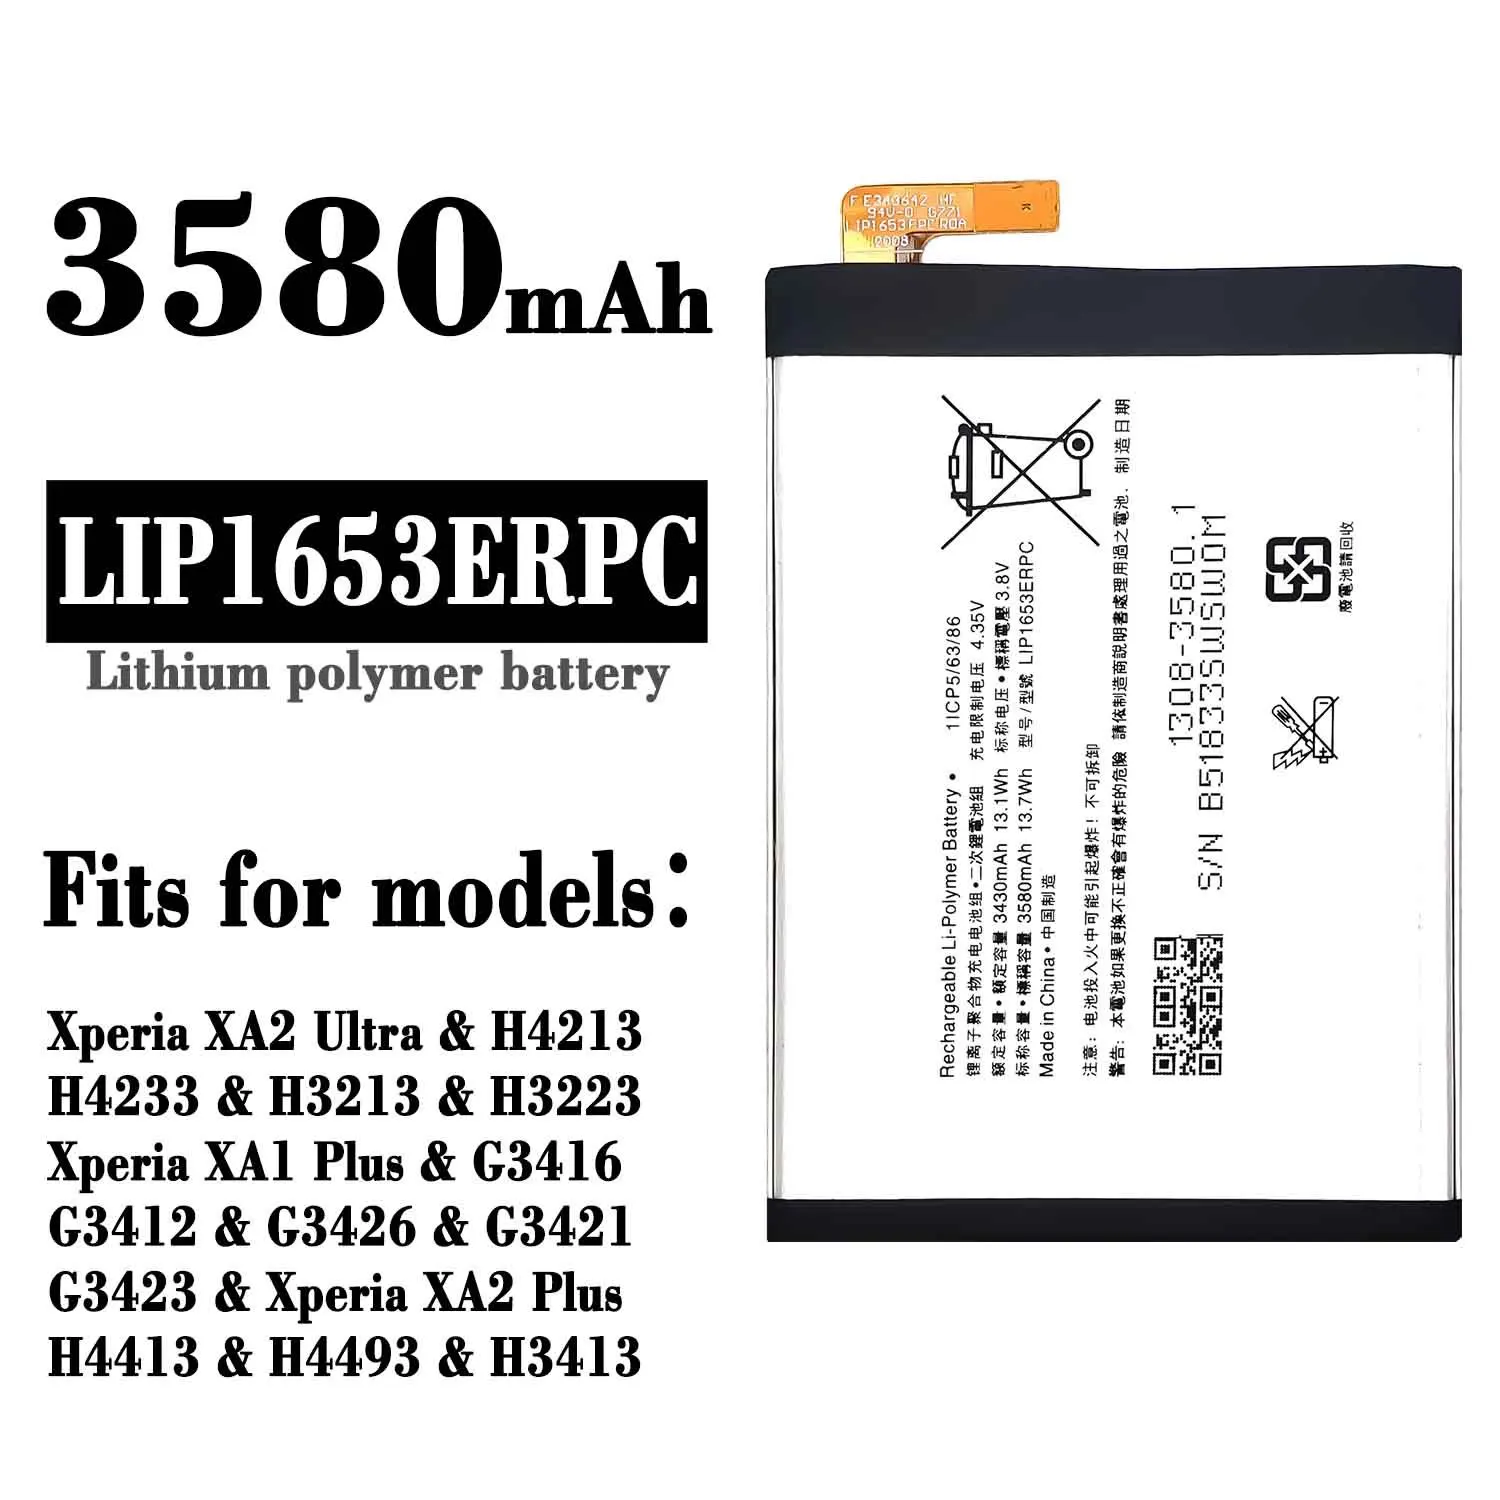 

100% Orginal 3580mAh LIP1653ERPC Battery For Sony Xperia XA2 Ultra Plus G3421 G3412 G3413 XA1 Plus Dual H4213 H4233 Phone +Tools